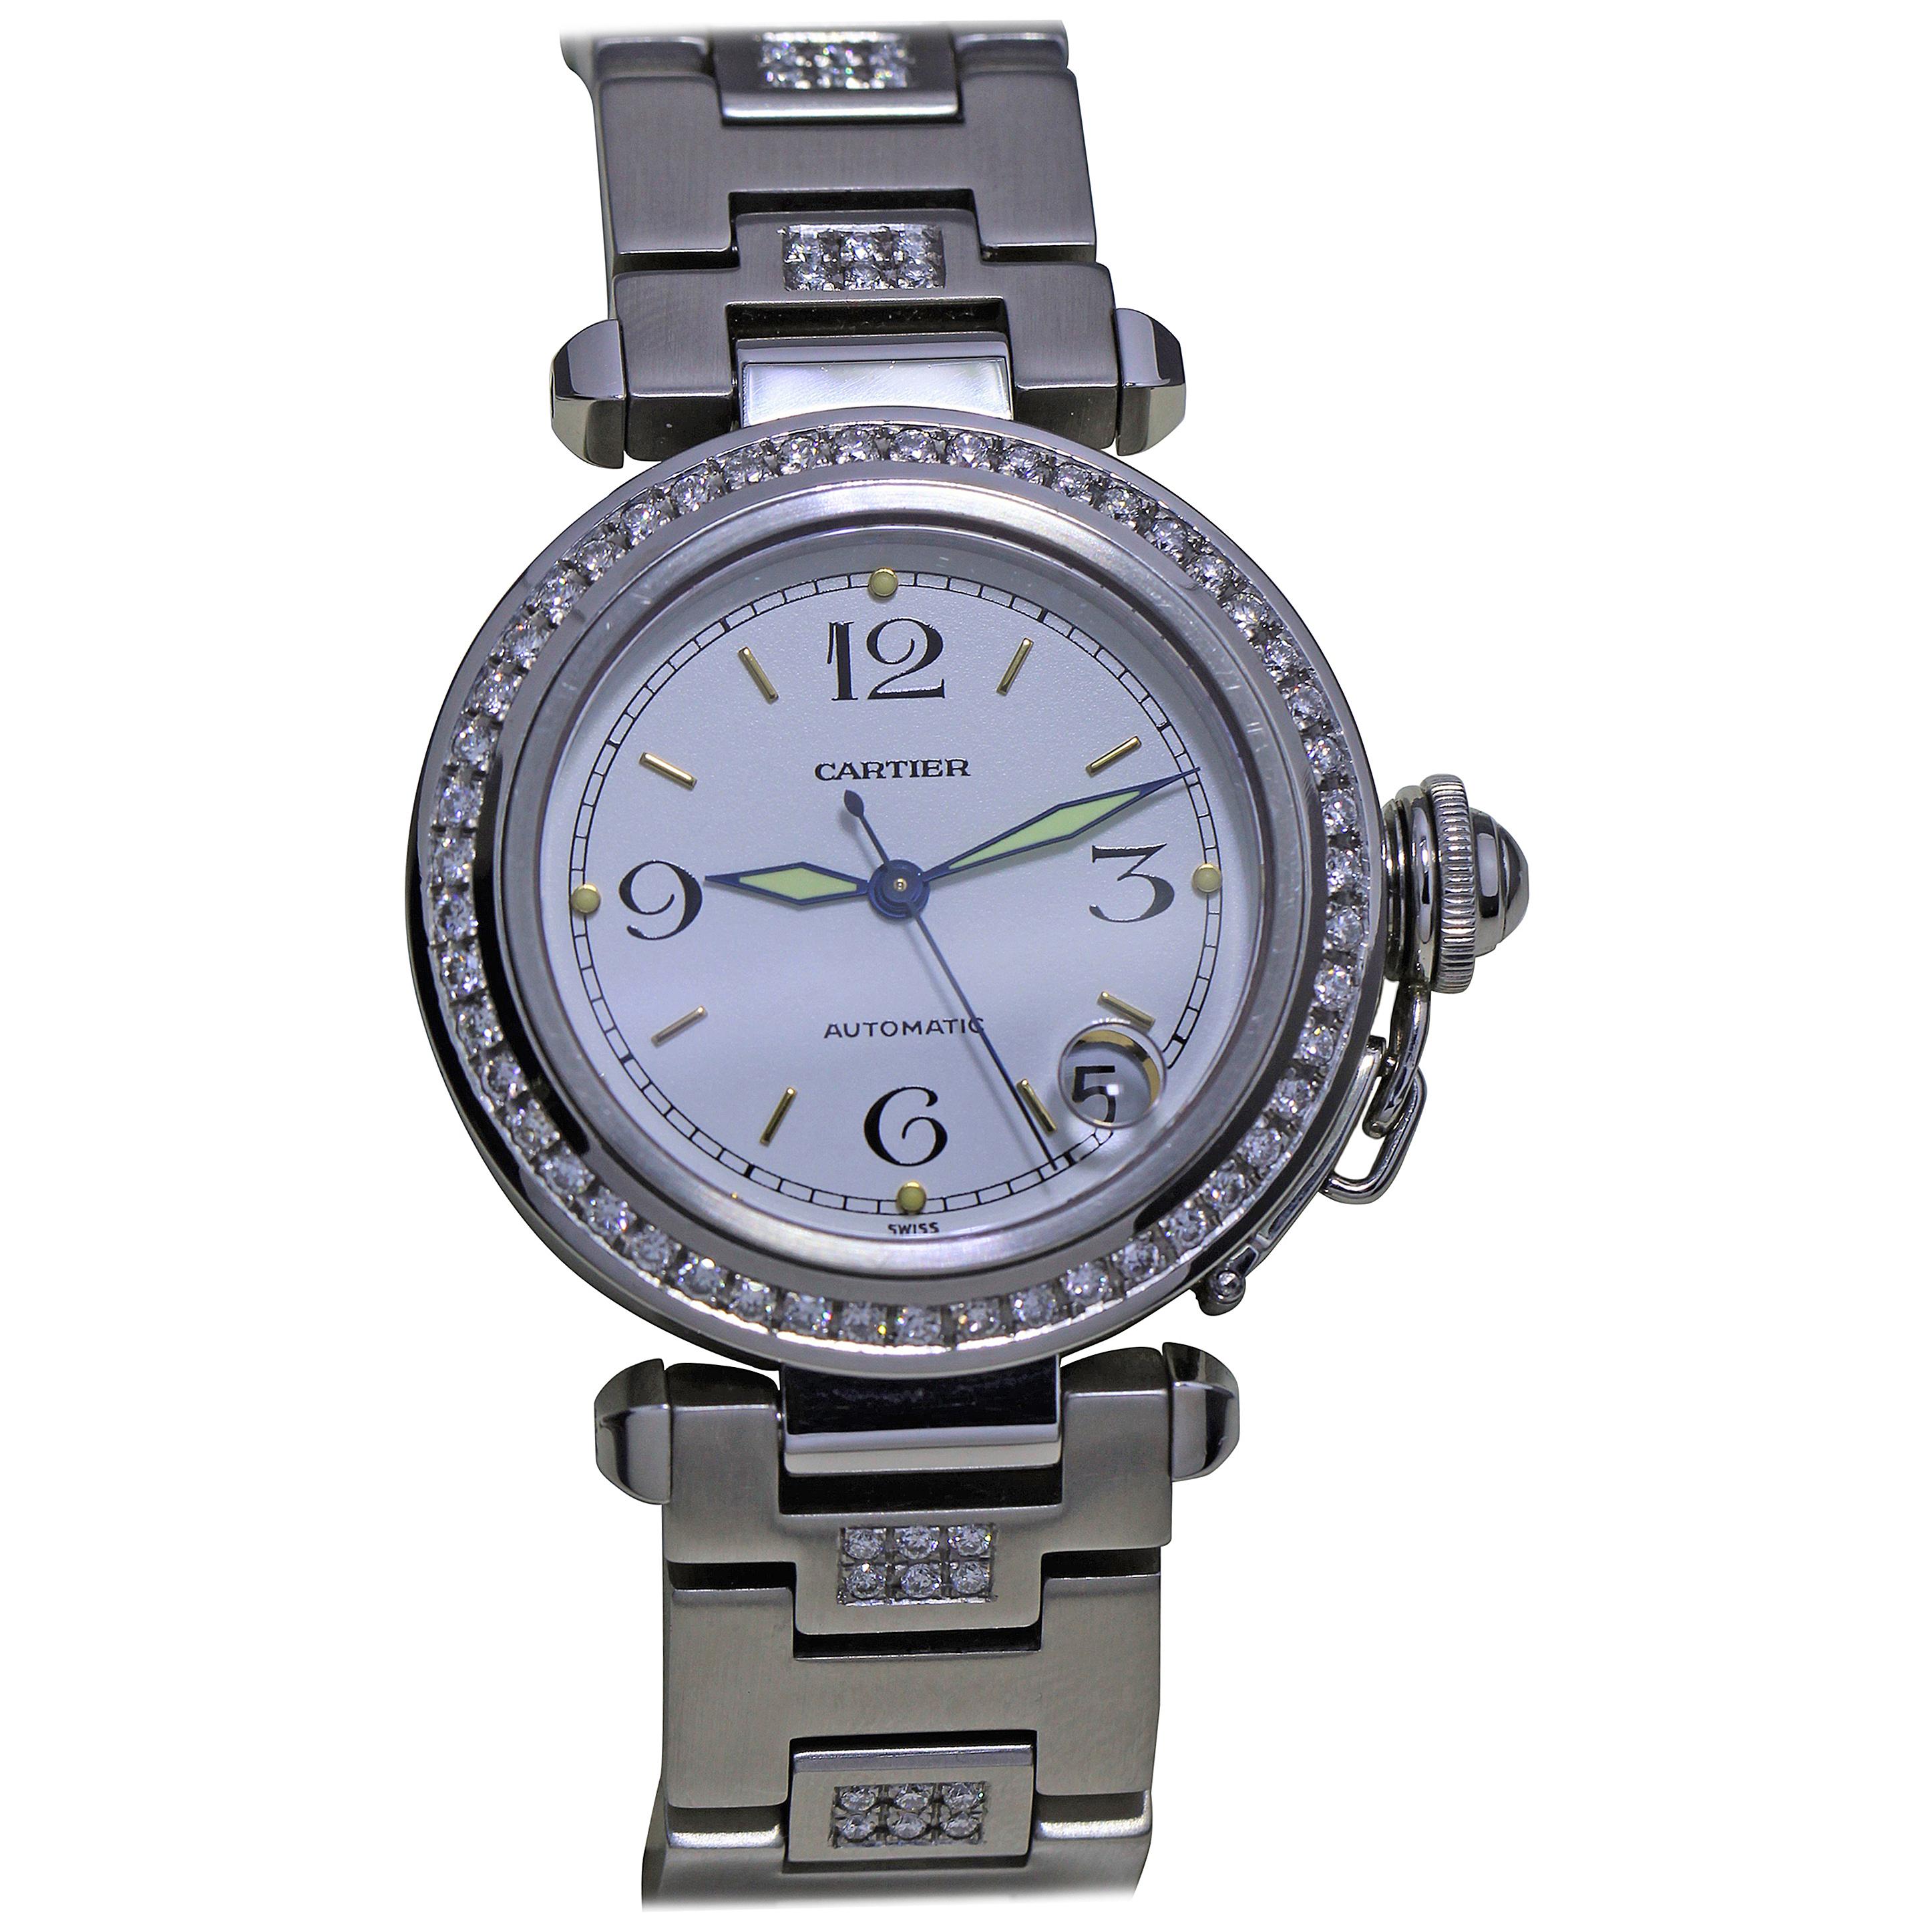 Cartier Men's Diamond Studded Automatic Watch